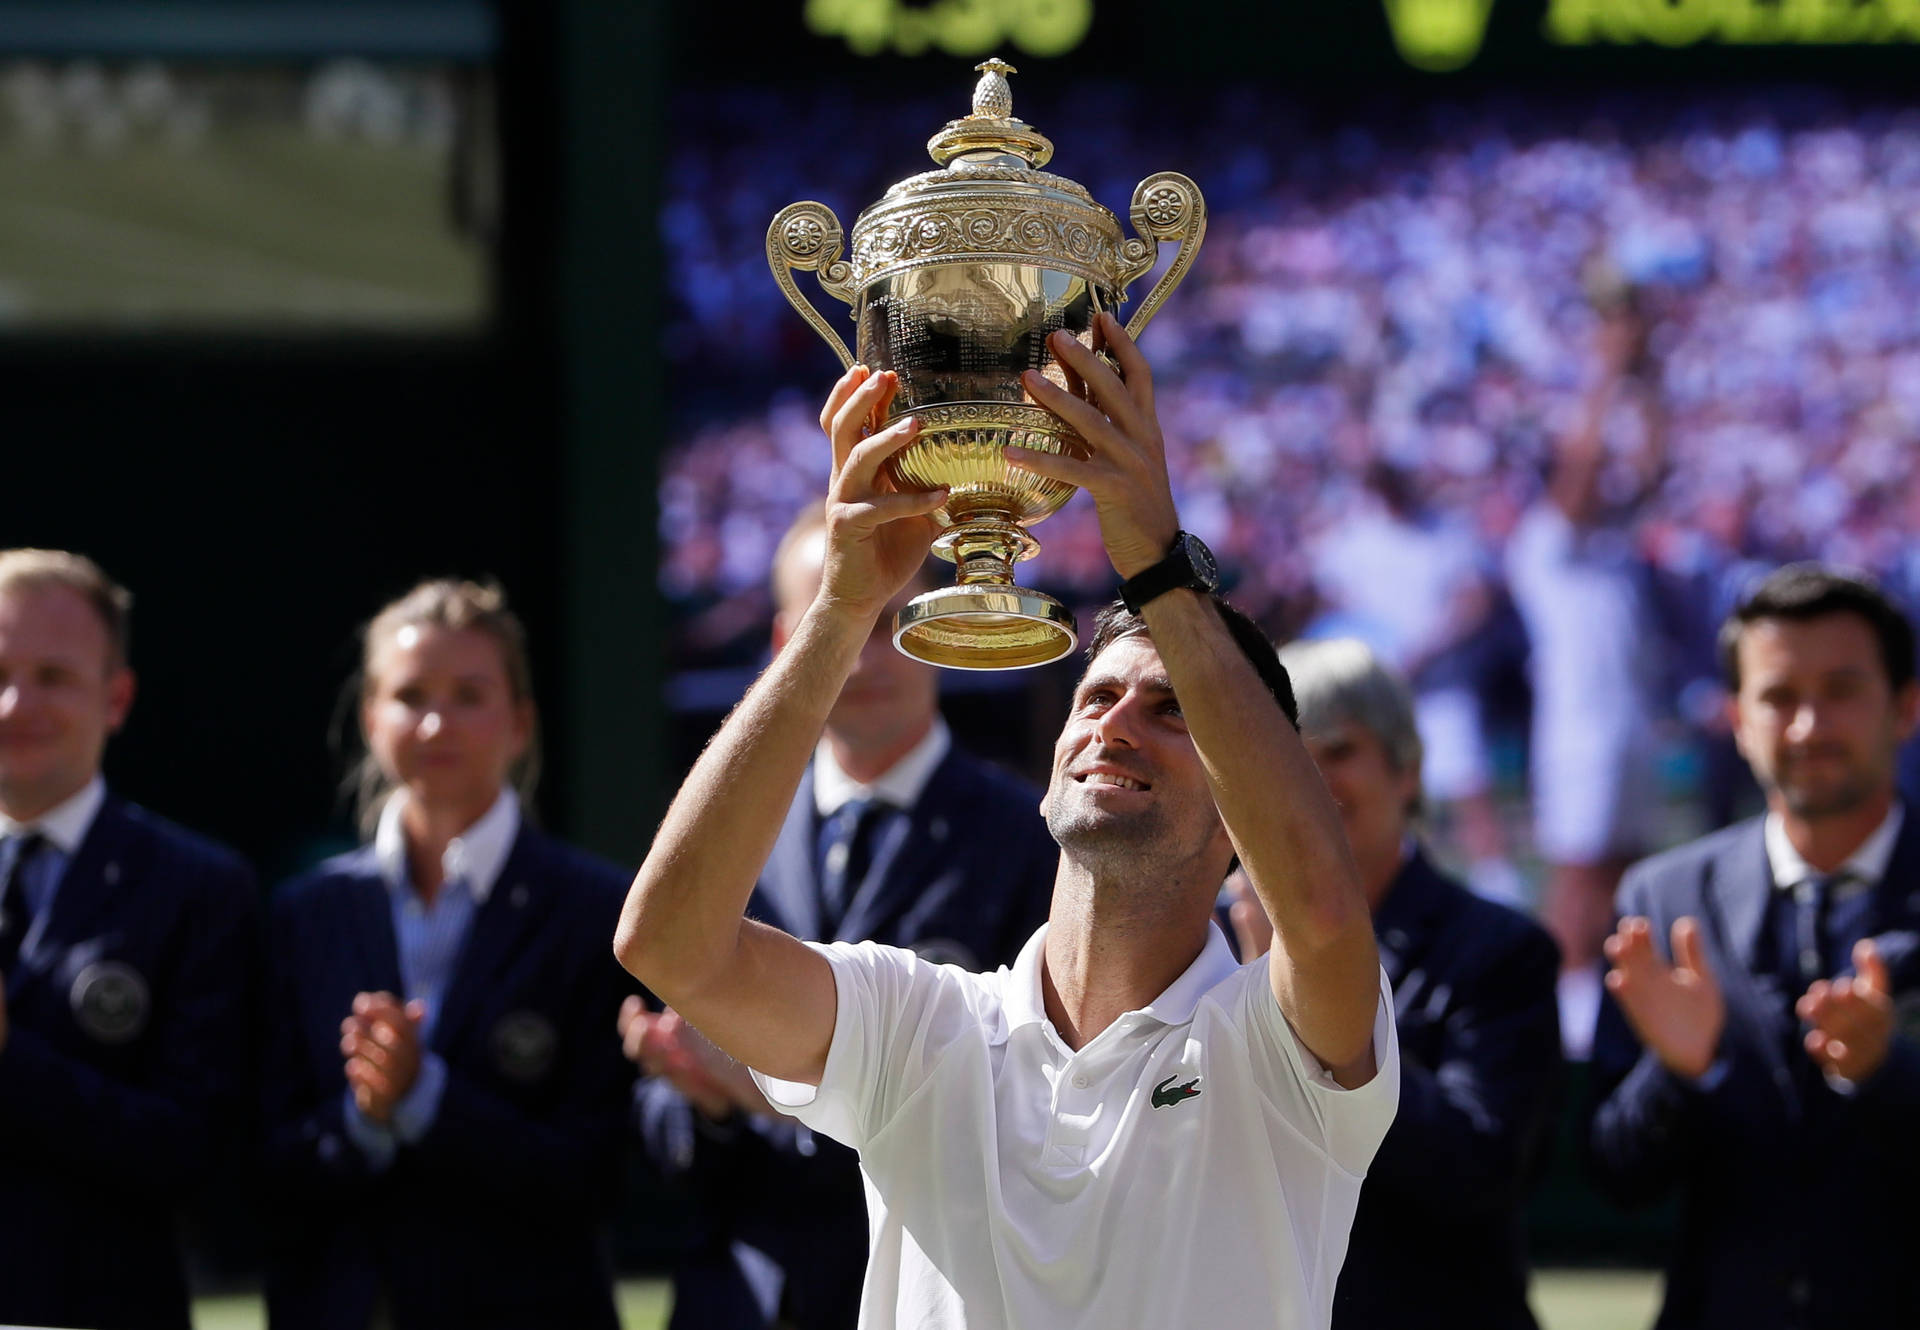 Novak Djokovic 2018 Wimbledon Men's Winner wallpaper.